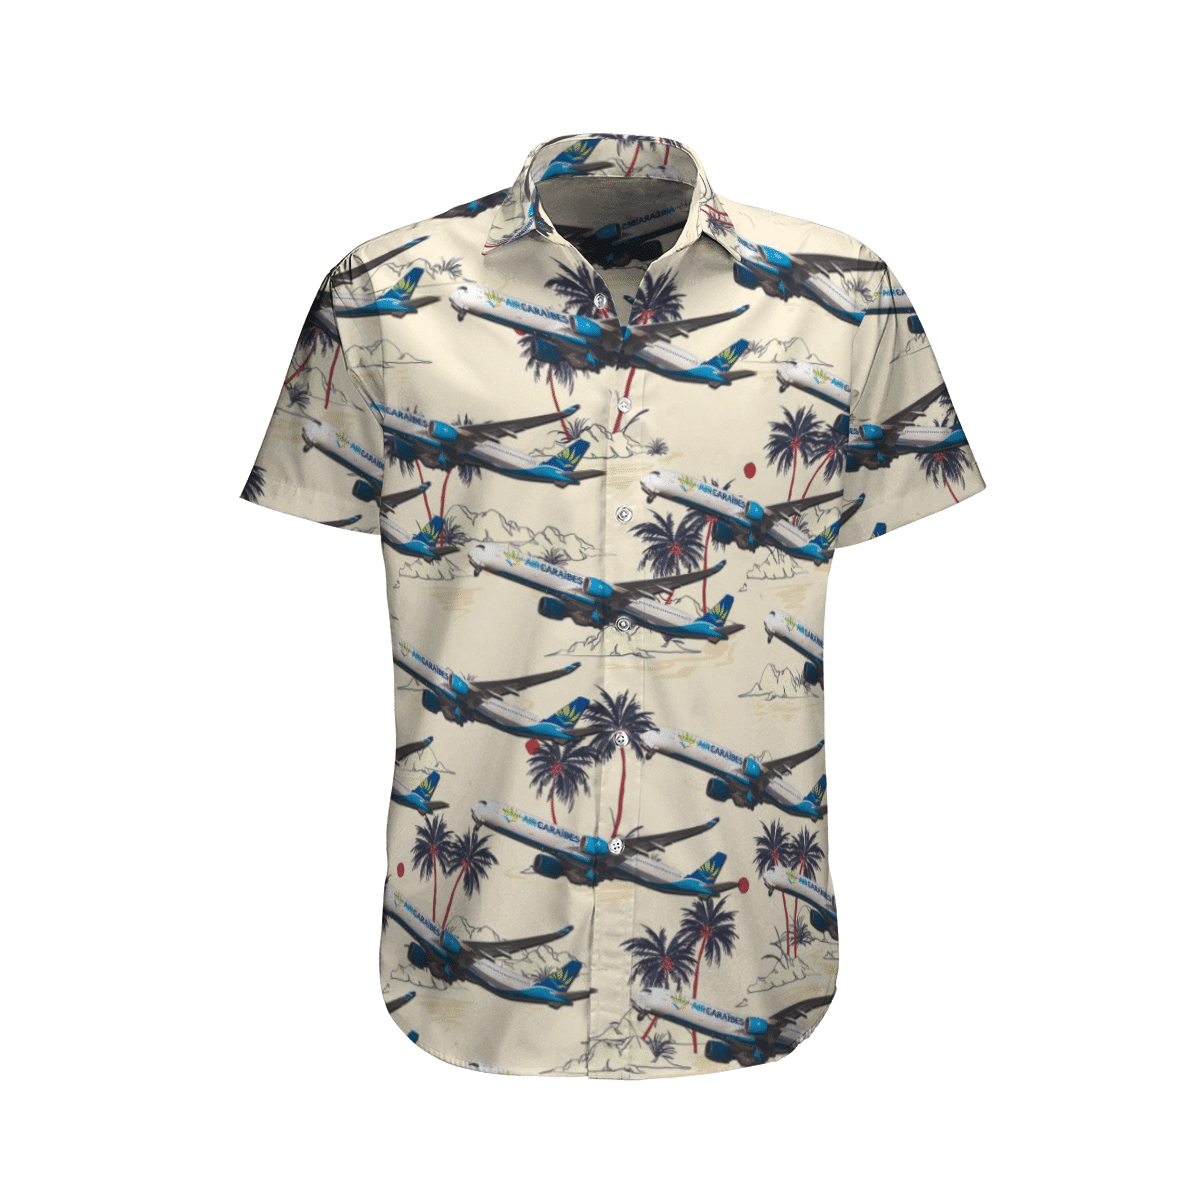 Get a new Hawaiian shirt to enjoy summer vacation 20